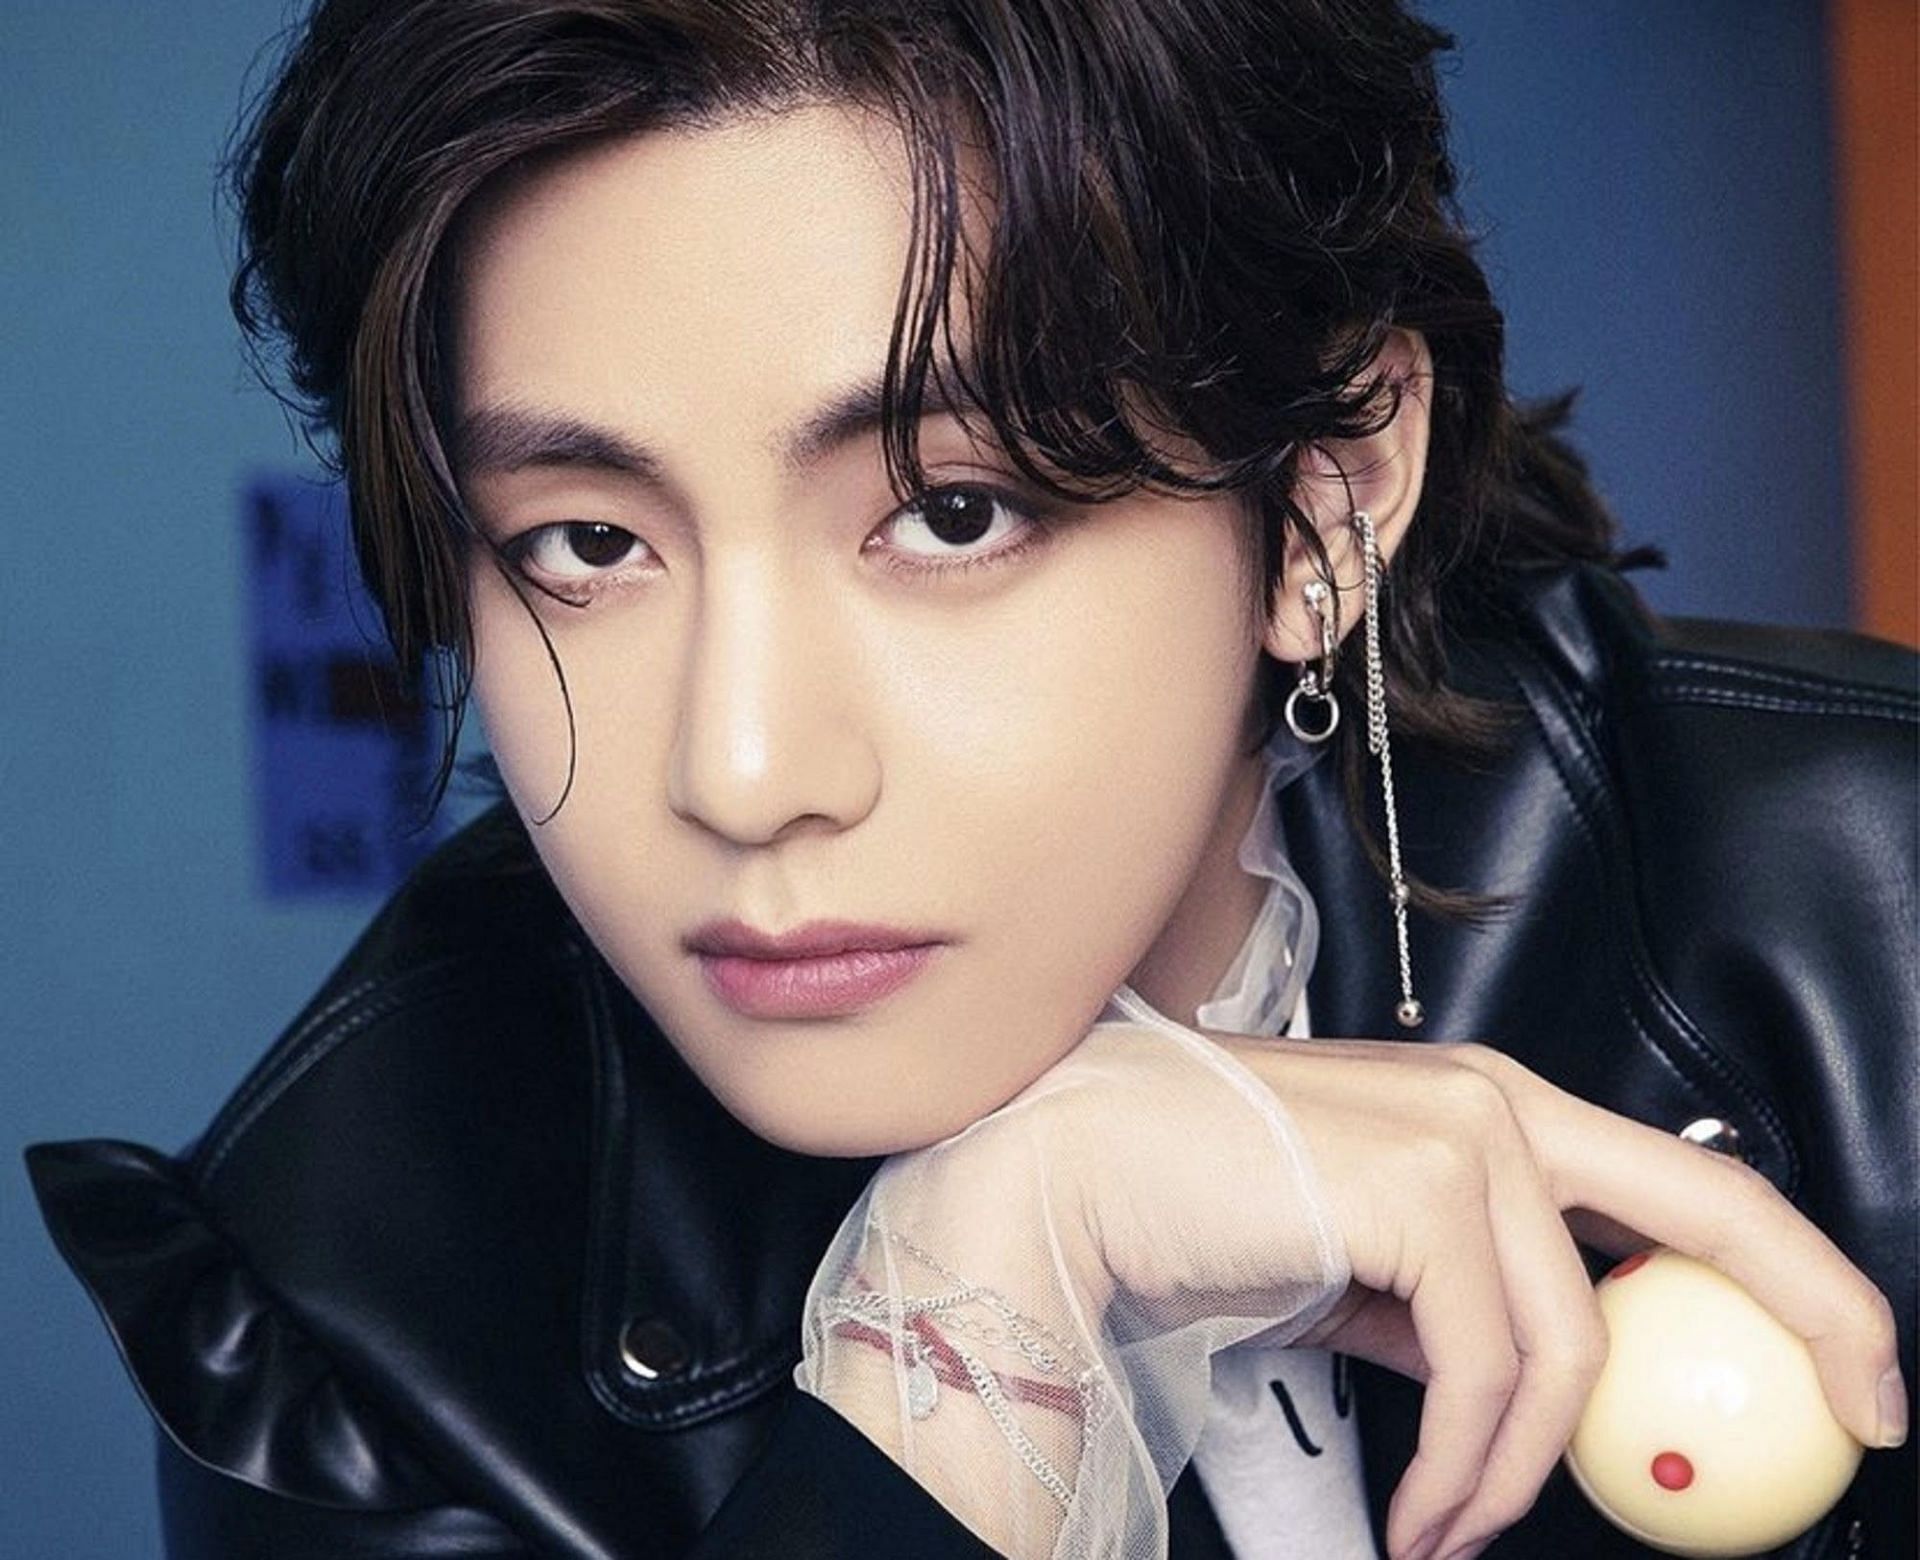 A still of the K-pop idol (Image via bts.bighitofficial/Instagram)